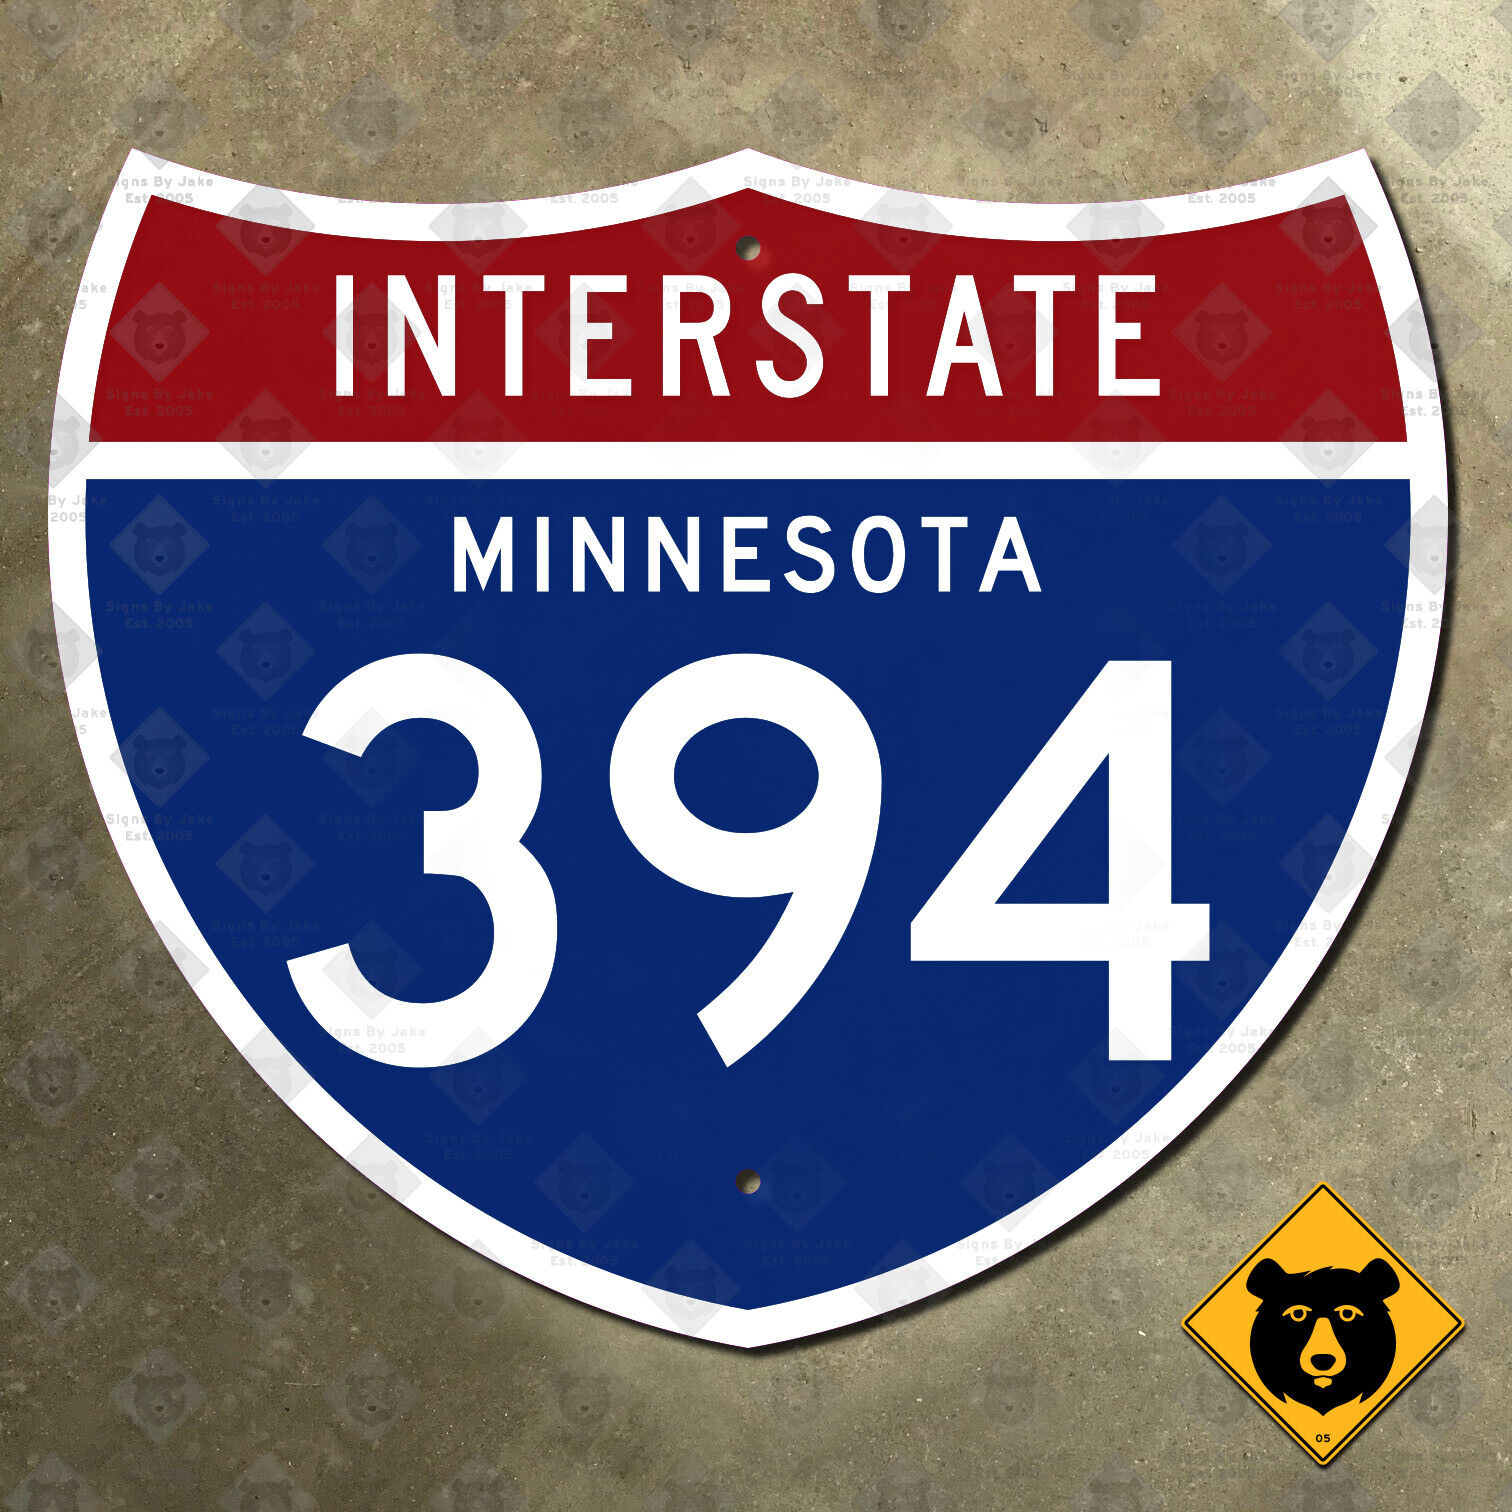 Minnesota Interstate 394 highway marker road sign 21x18 Minneapolis Minnetonka